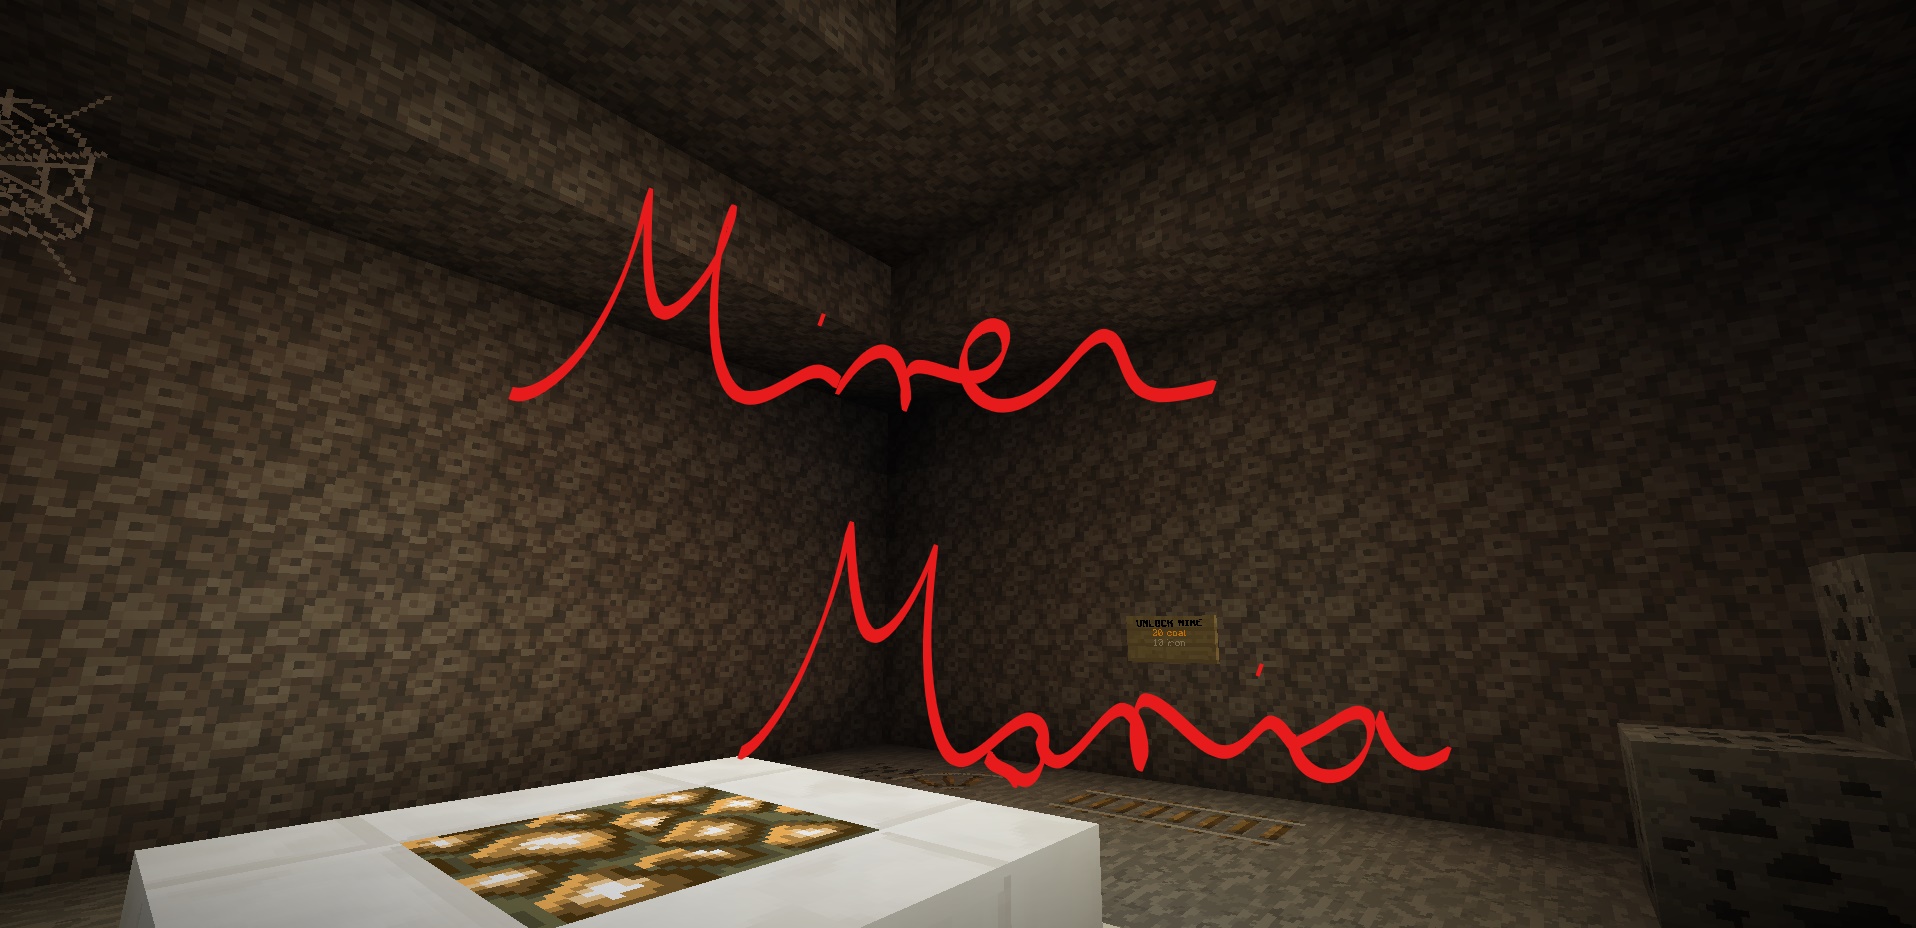 Tải về Miner Mania cho Minecraft 1.15.2